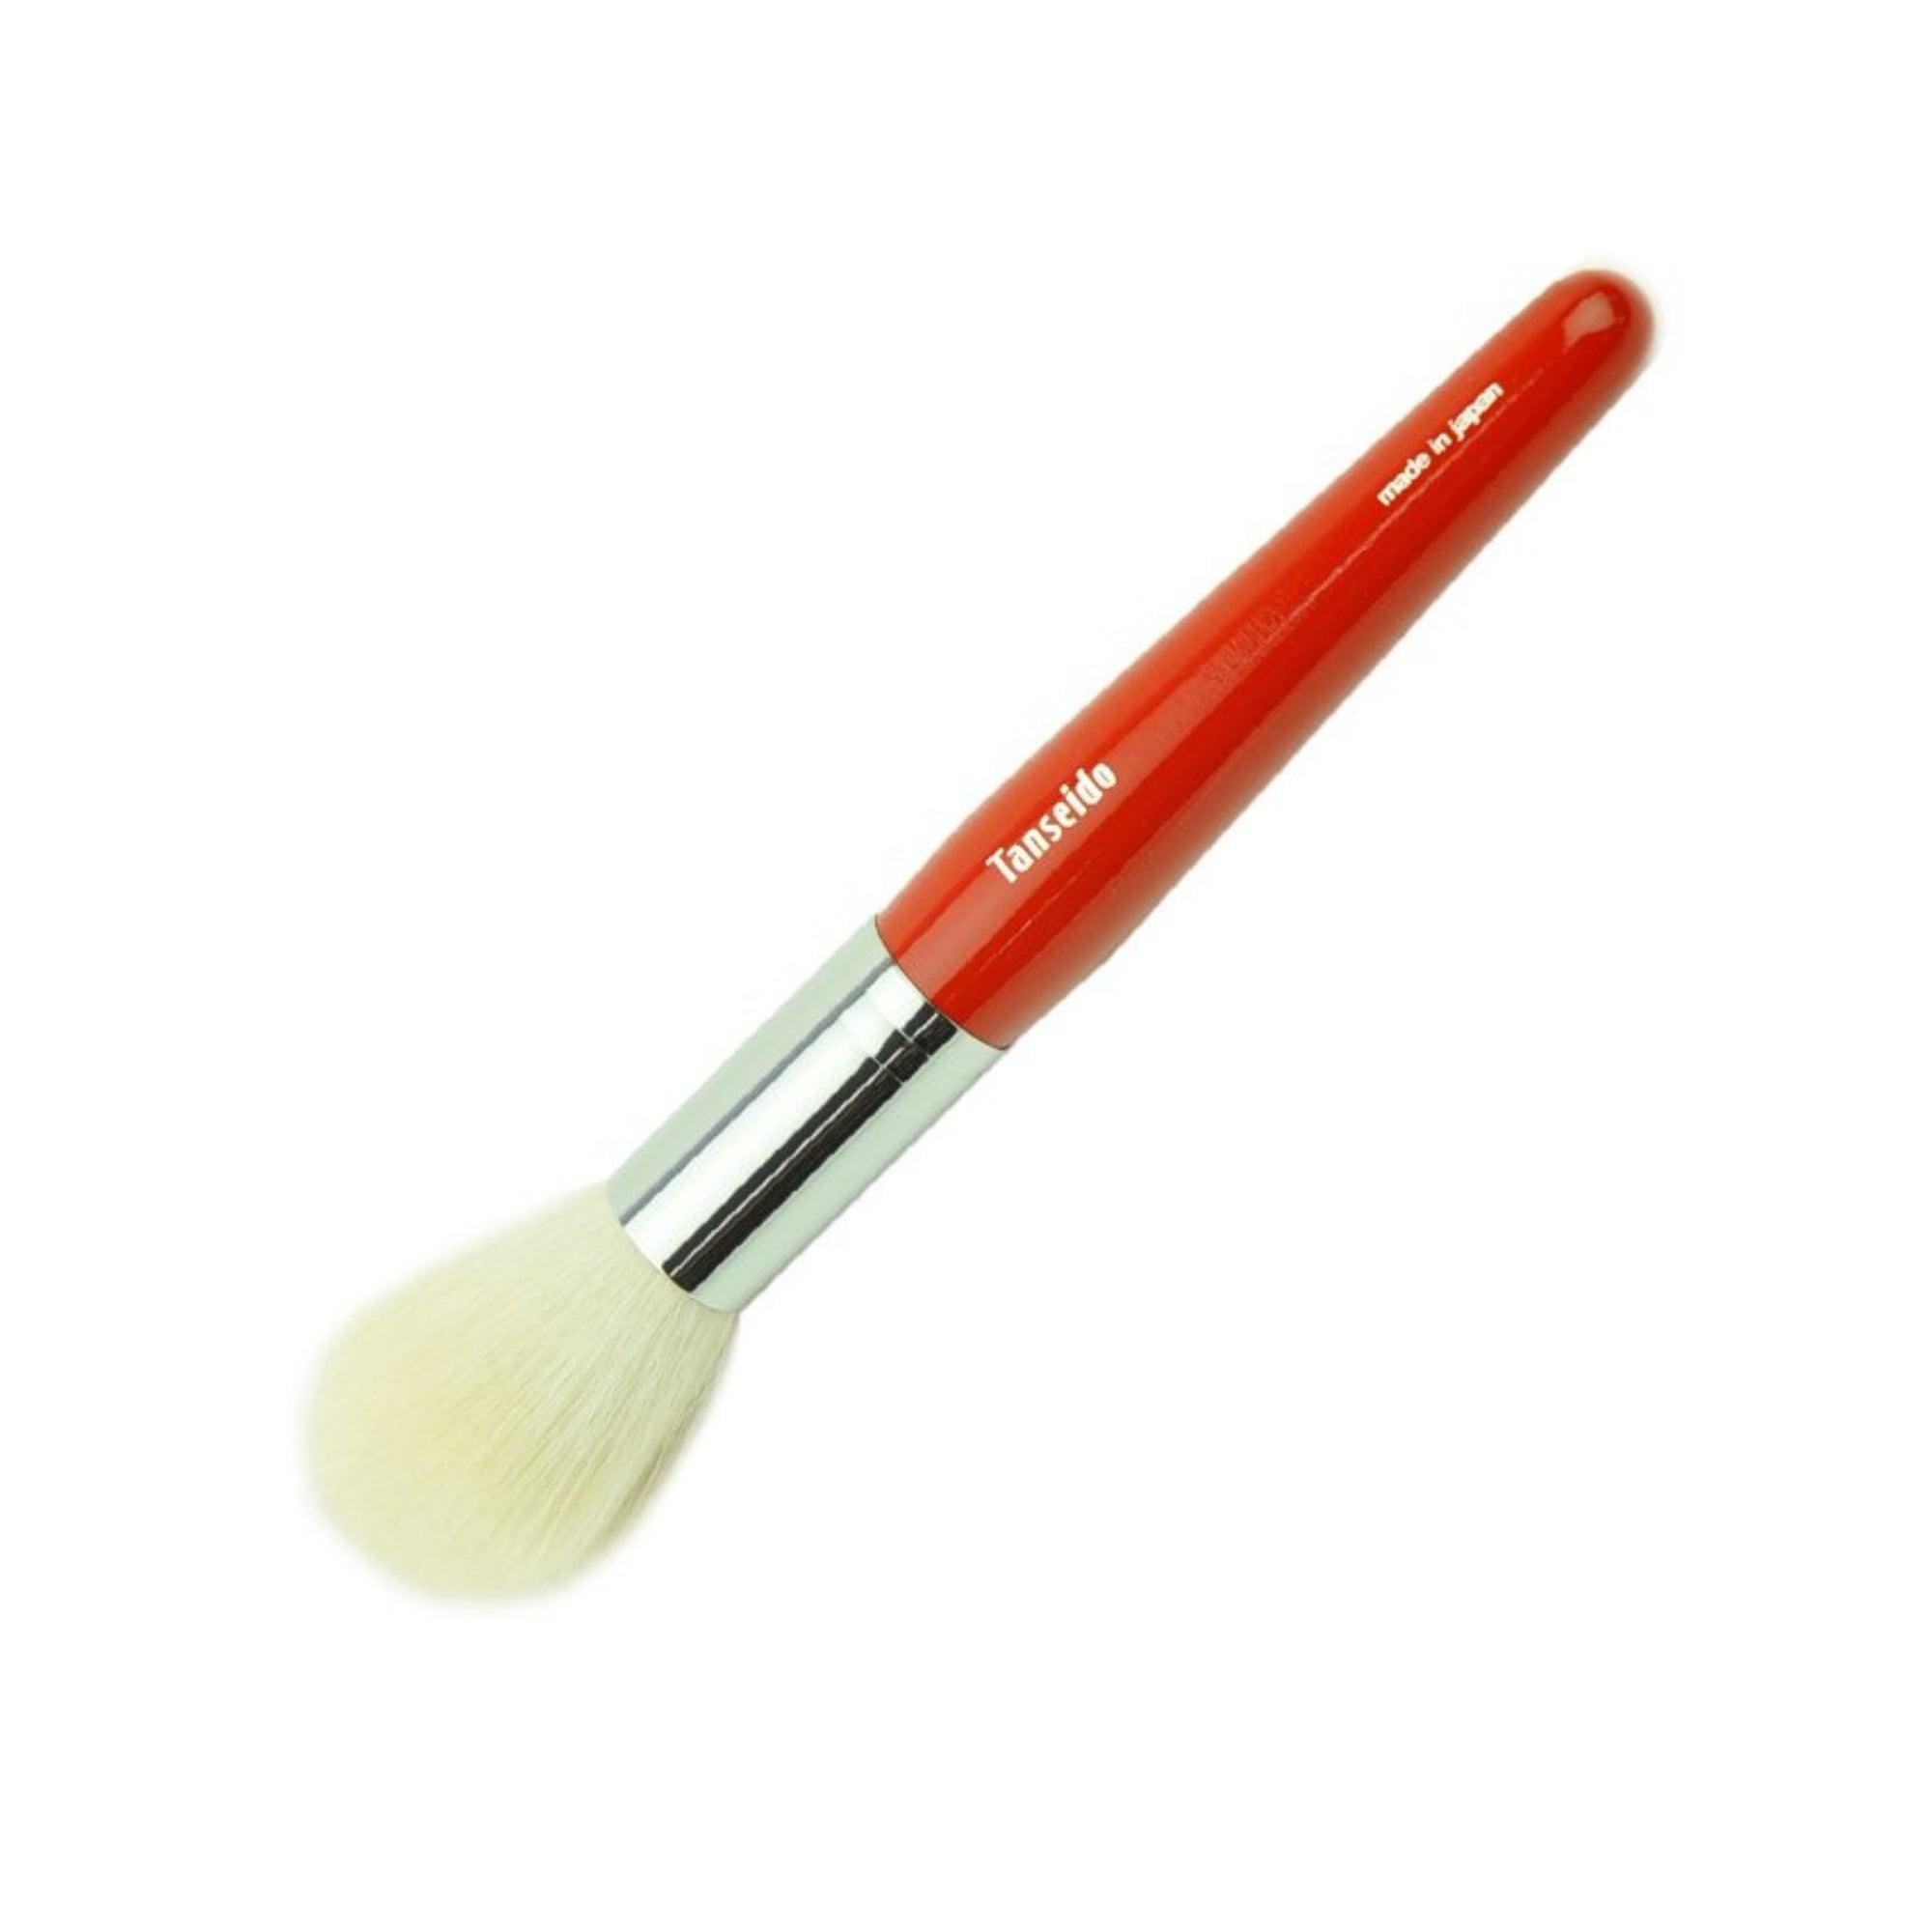 Tanseido WC20 Cheek Brush - Fude Beauty, Japanese Makeup Brushes